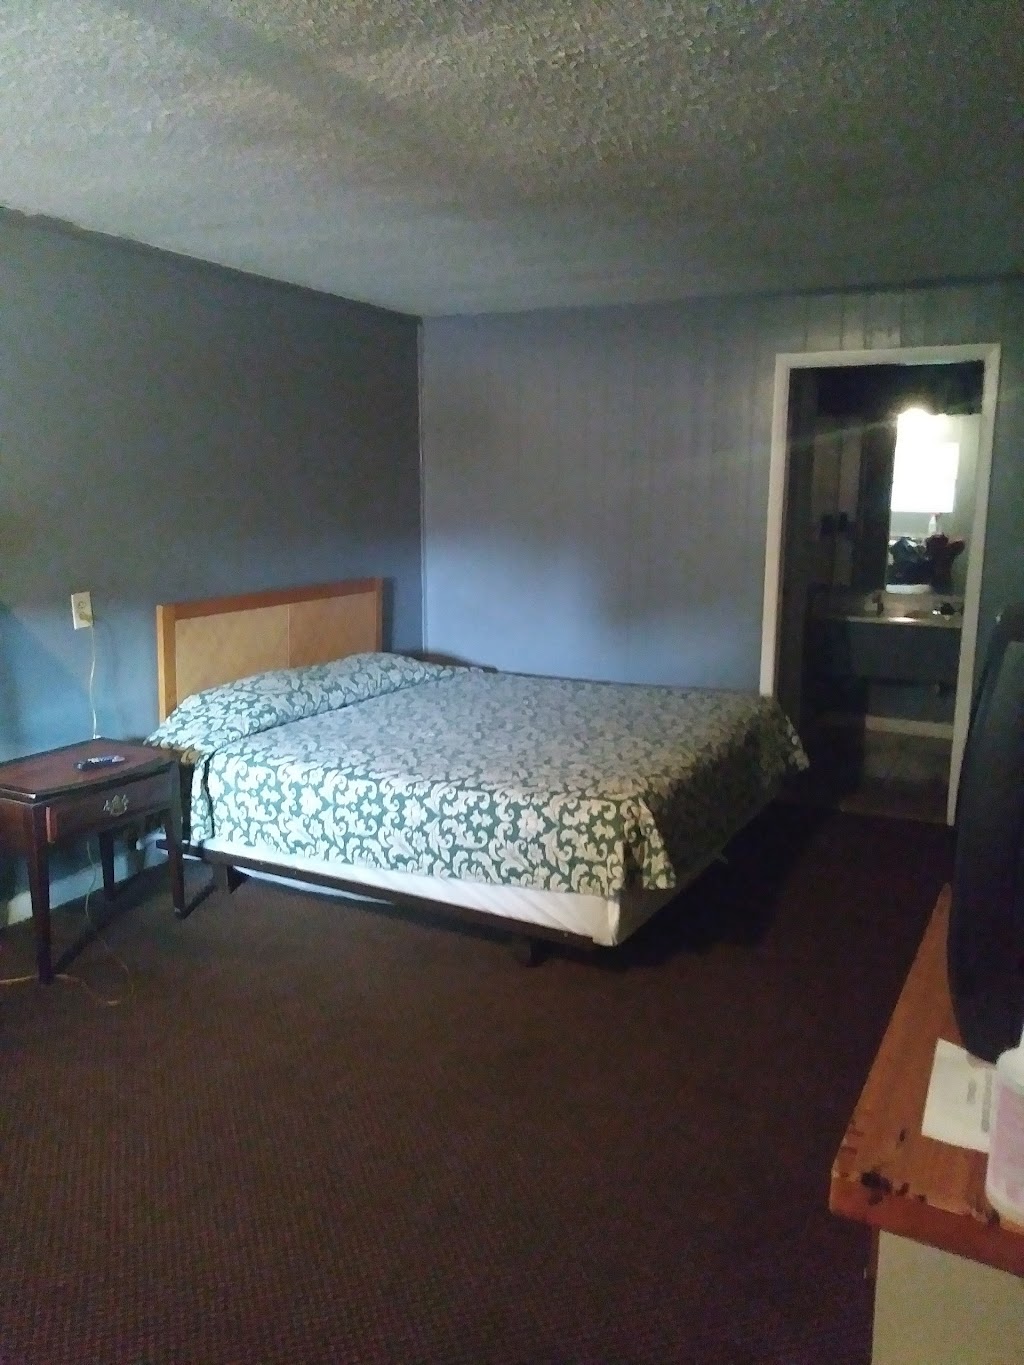 Affordable Hotel - Decatur | 1900 Glenfair Rd, Decatur, GA 30035 | Phone: (404) 286-5775